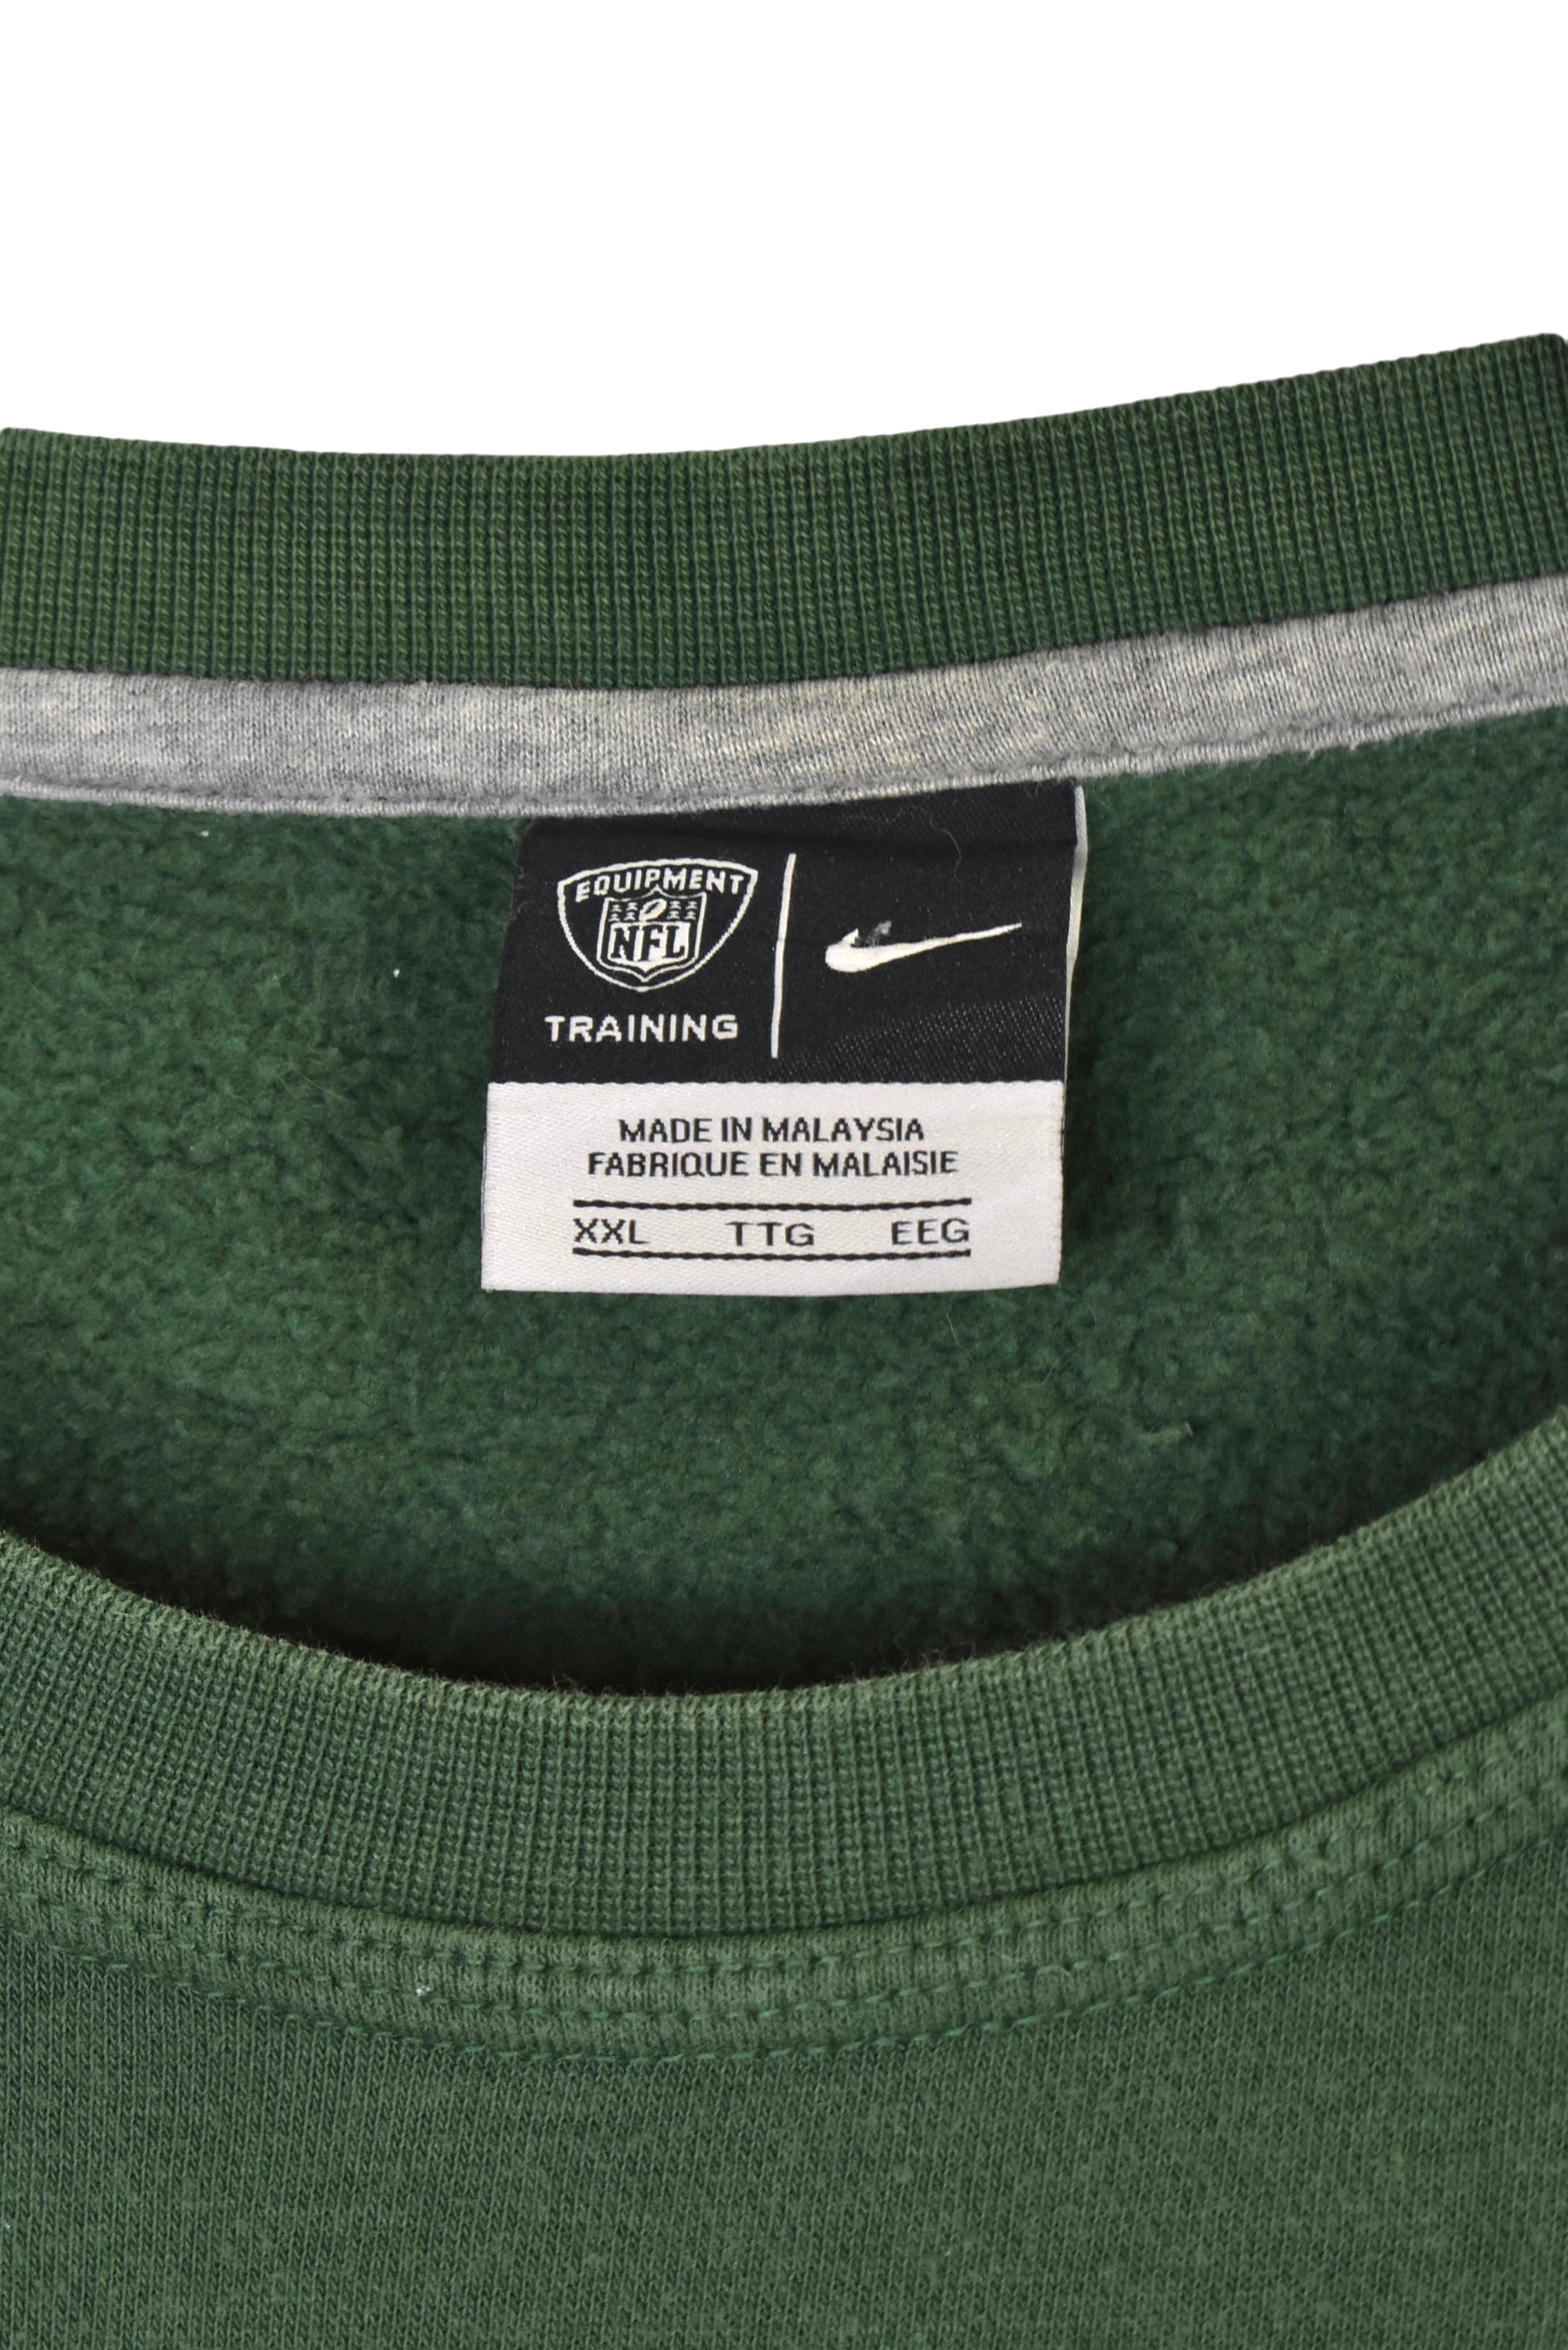 Vintage Green Bay Packers sweatshirt (2XL), green NFL embroidered crewneck